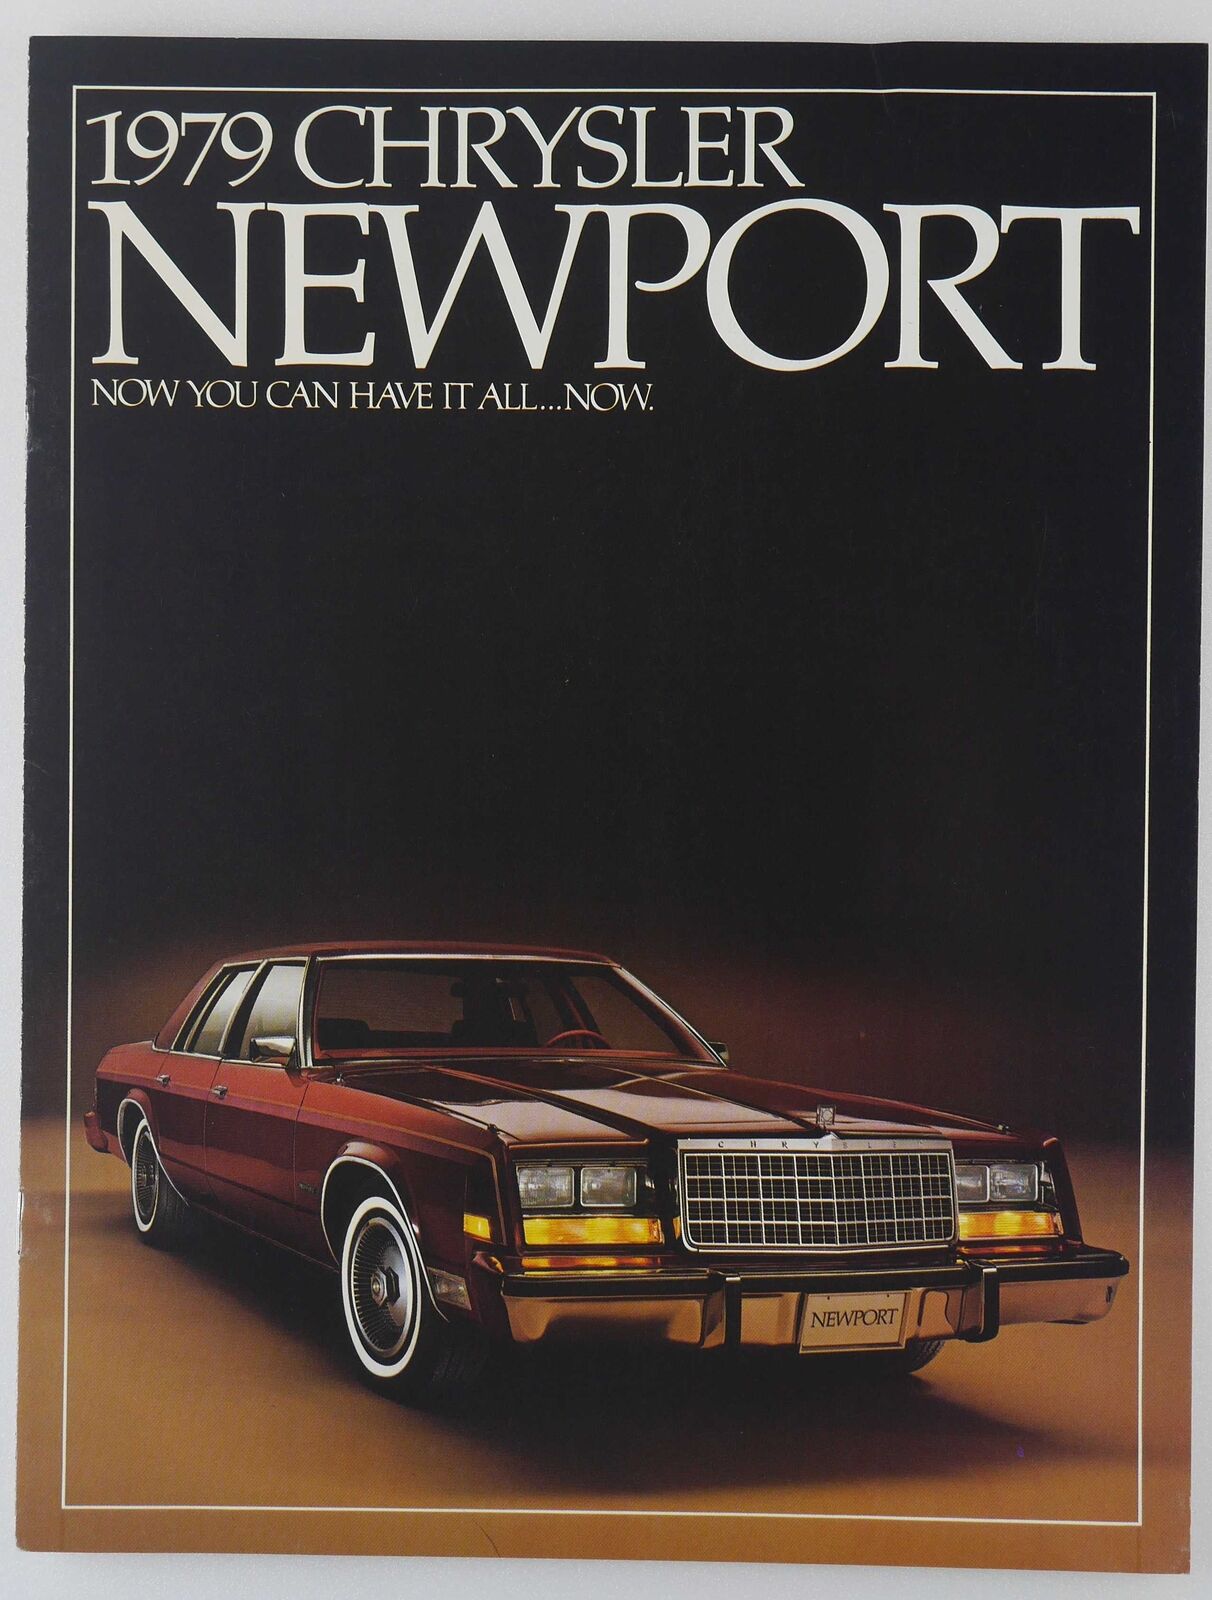 1979 Chrysler Newport Dealer Sales Brochure NOS Vintage Classic Auto Brochure